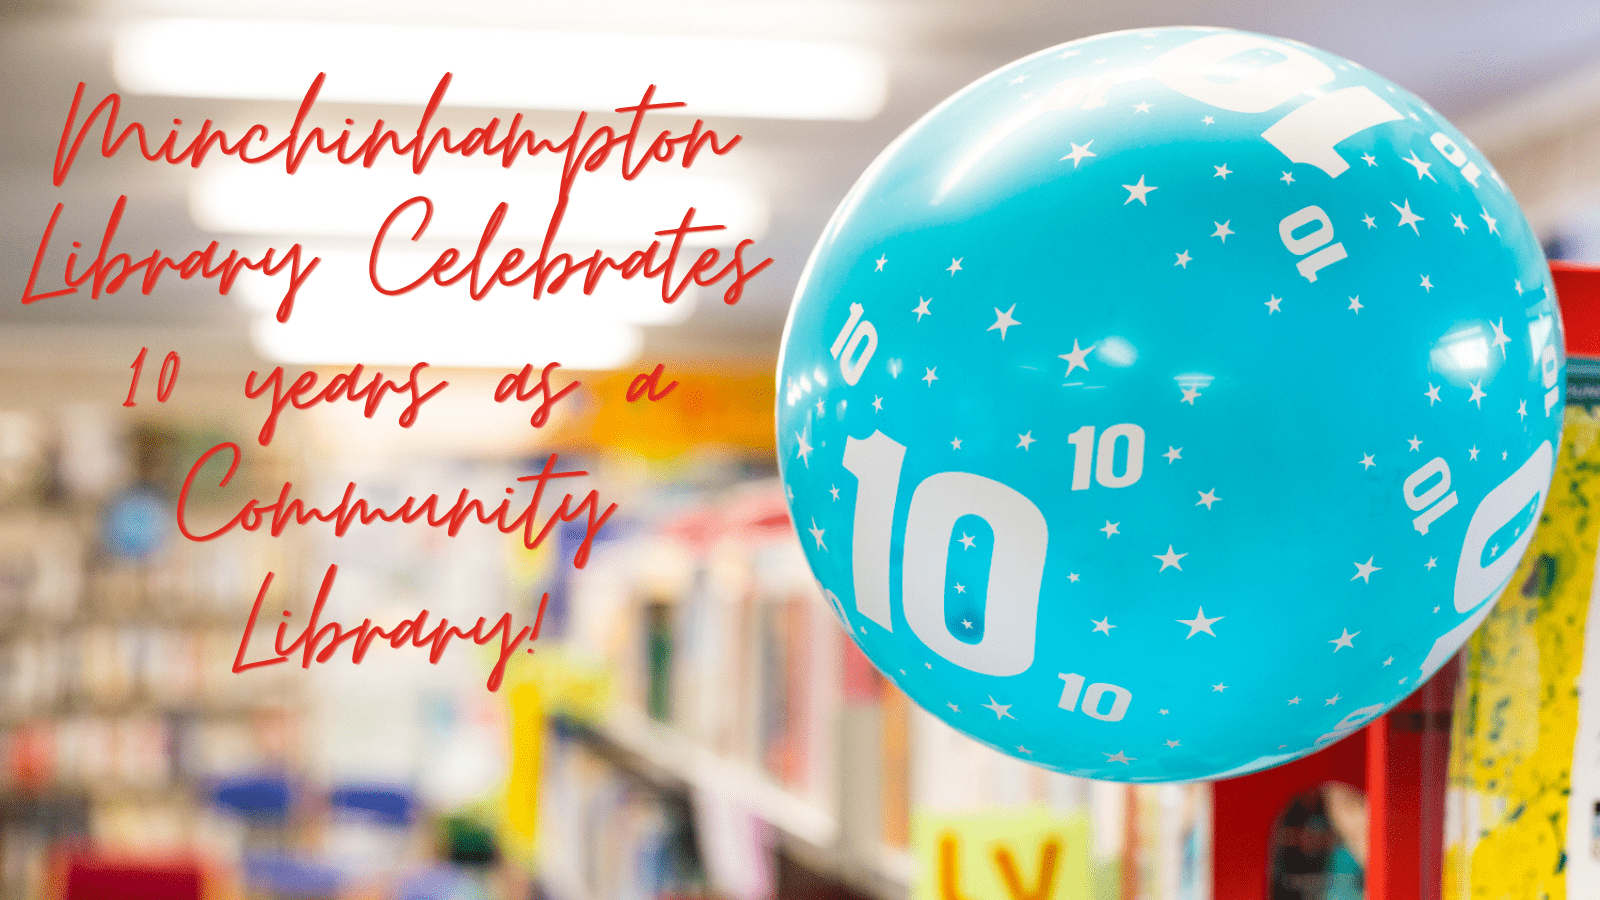 Minchinhampton Celebrates 10 years as a Community Library!